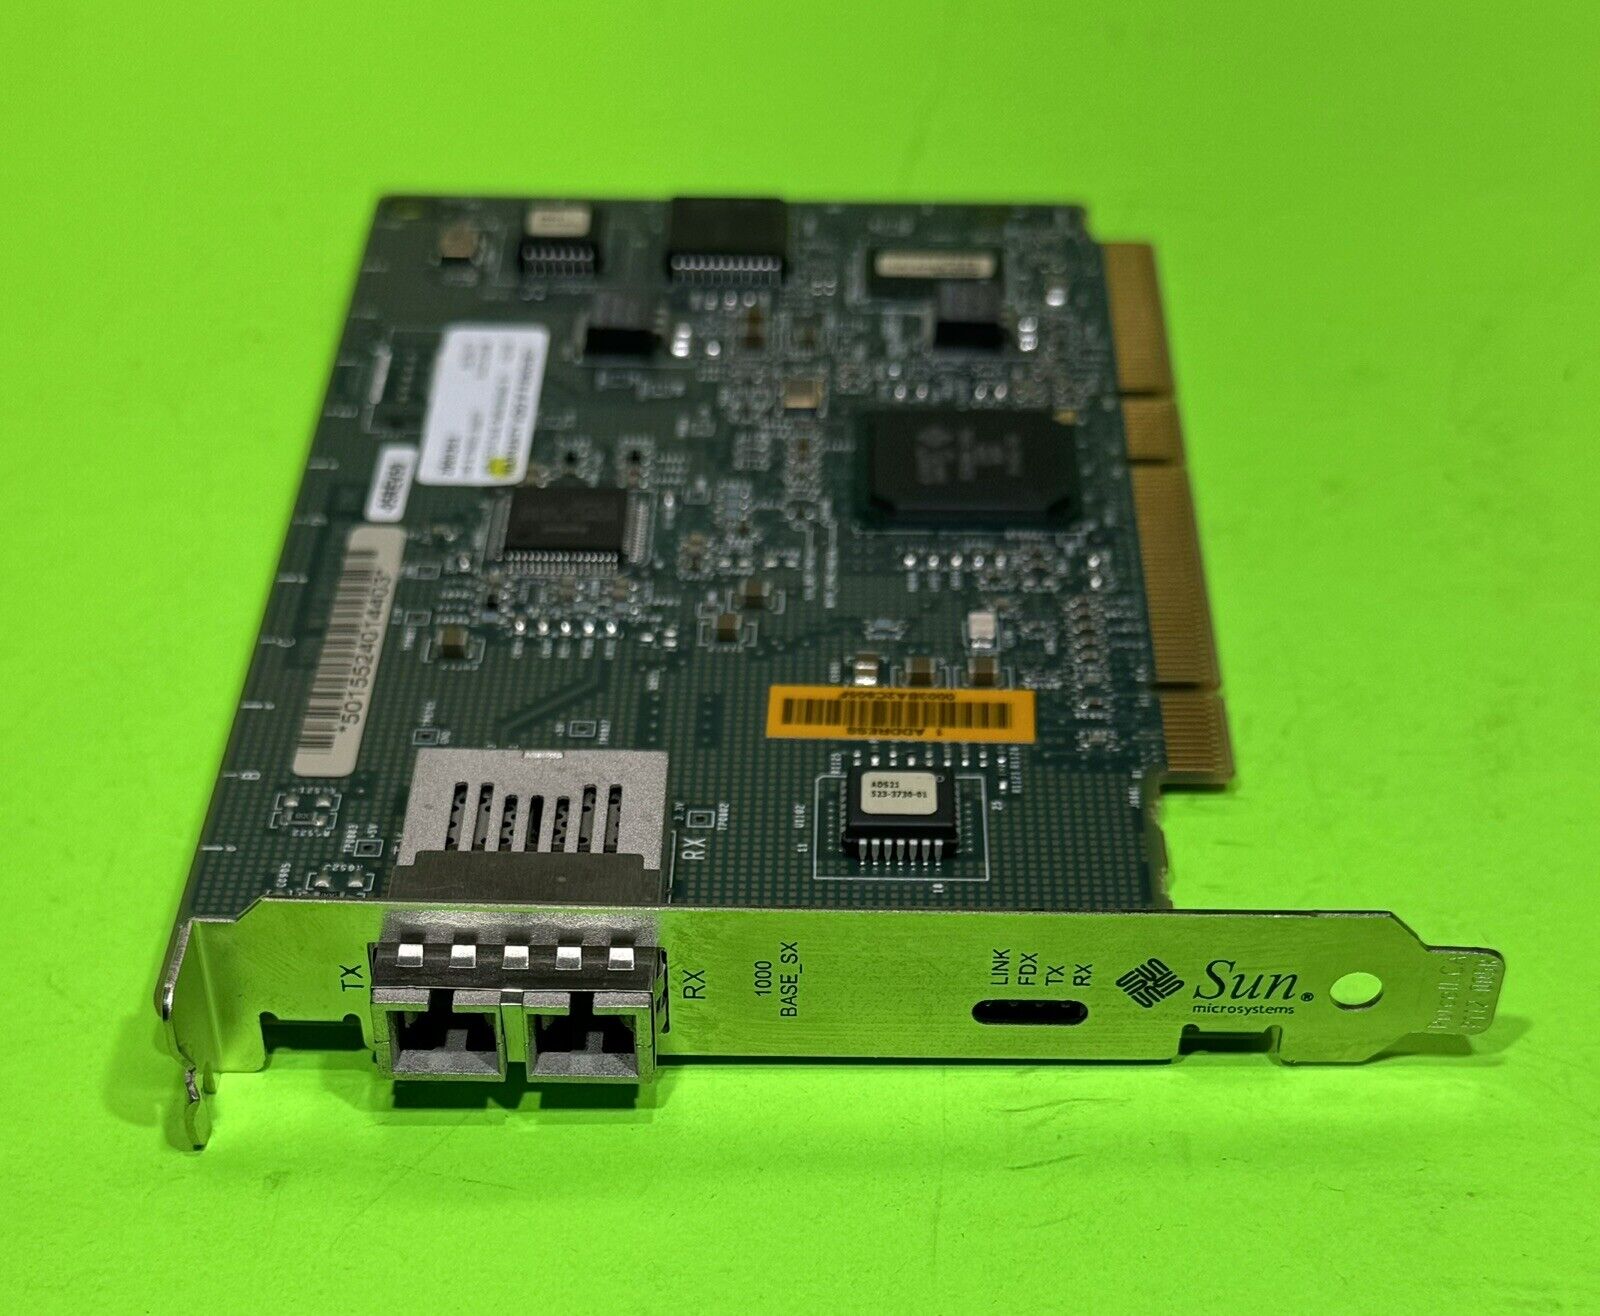 Sun 501-5524 PCI GigaSwift Ethernet 1.0 MMF (Fiber) X1151A / X3151A, Tested